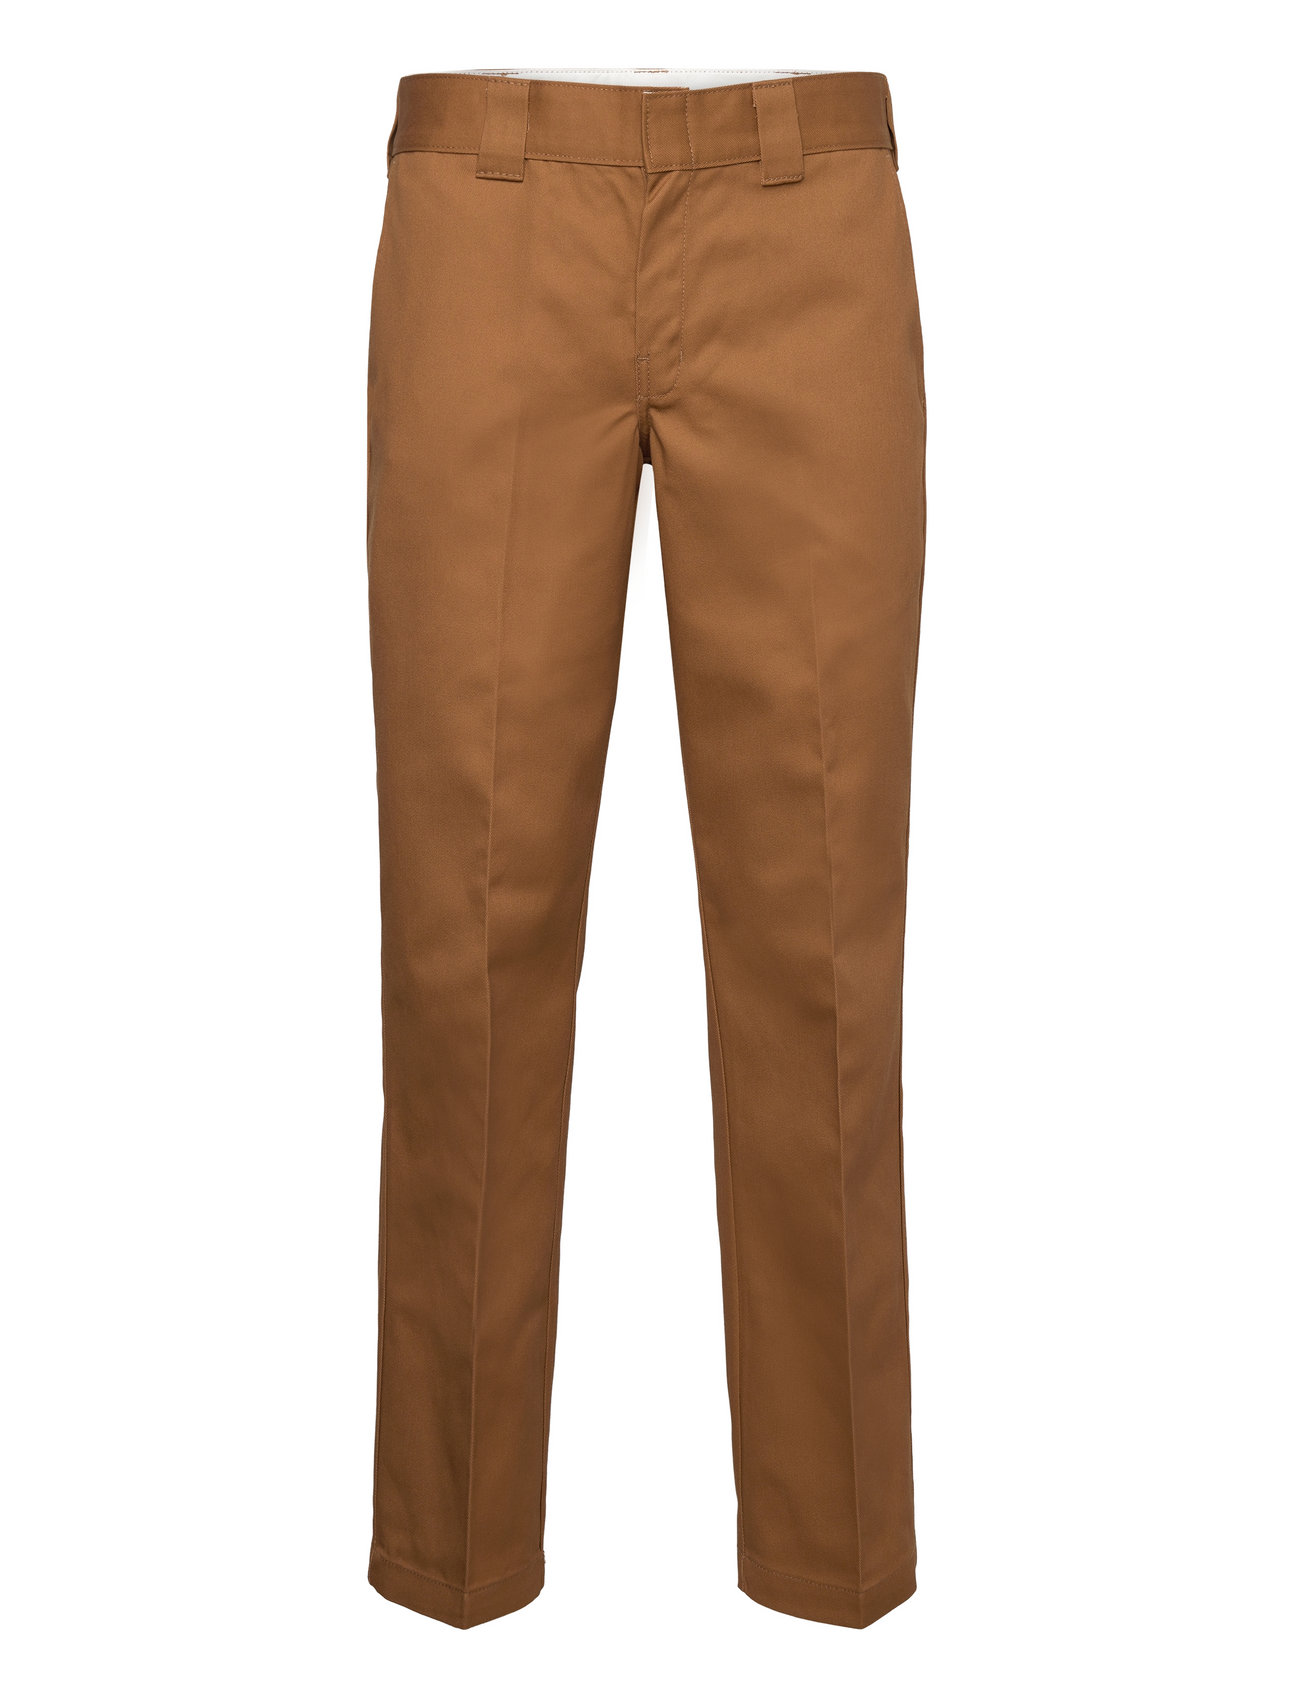 Wp873 Work Pant Rec Designers Trousers Chinos Brown Dickies